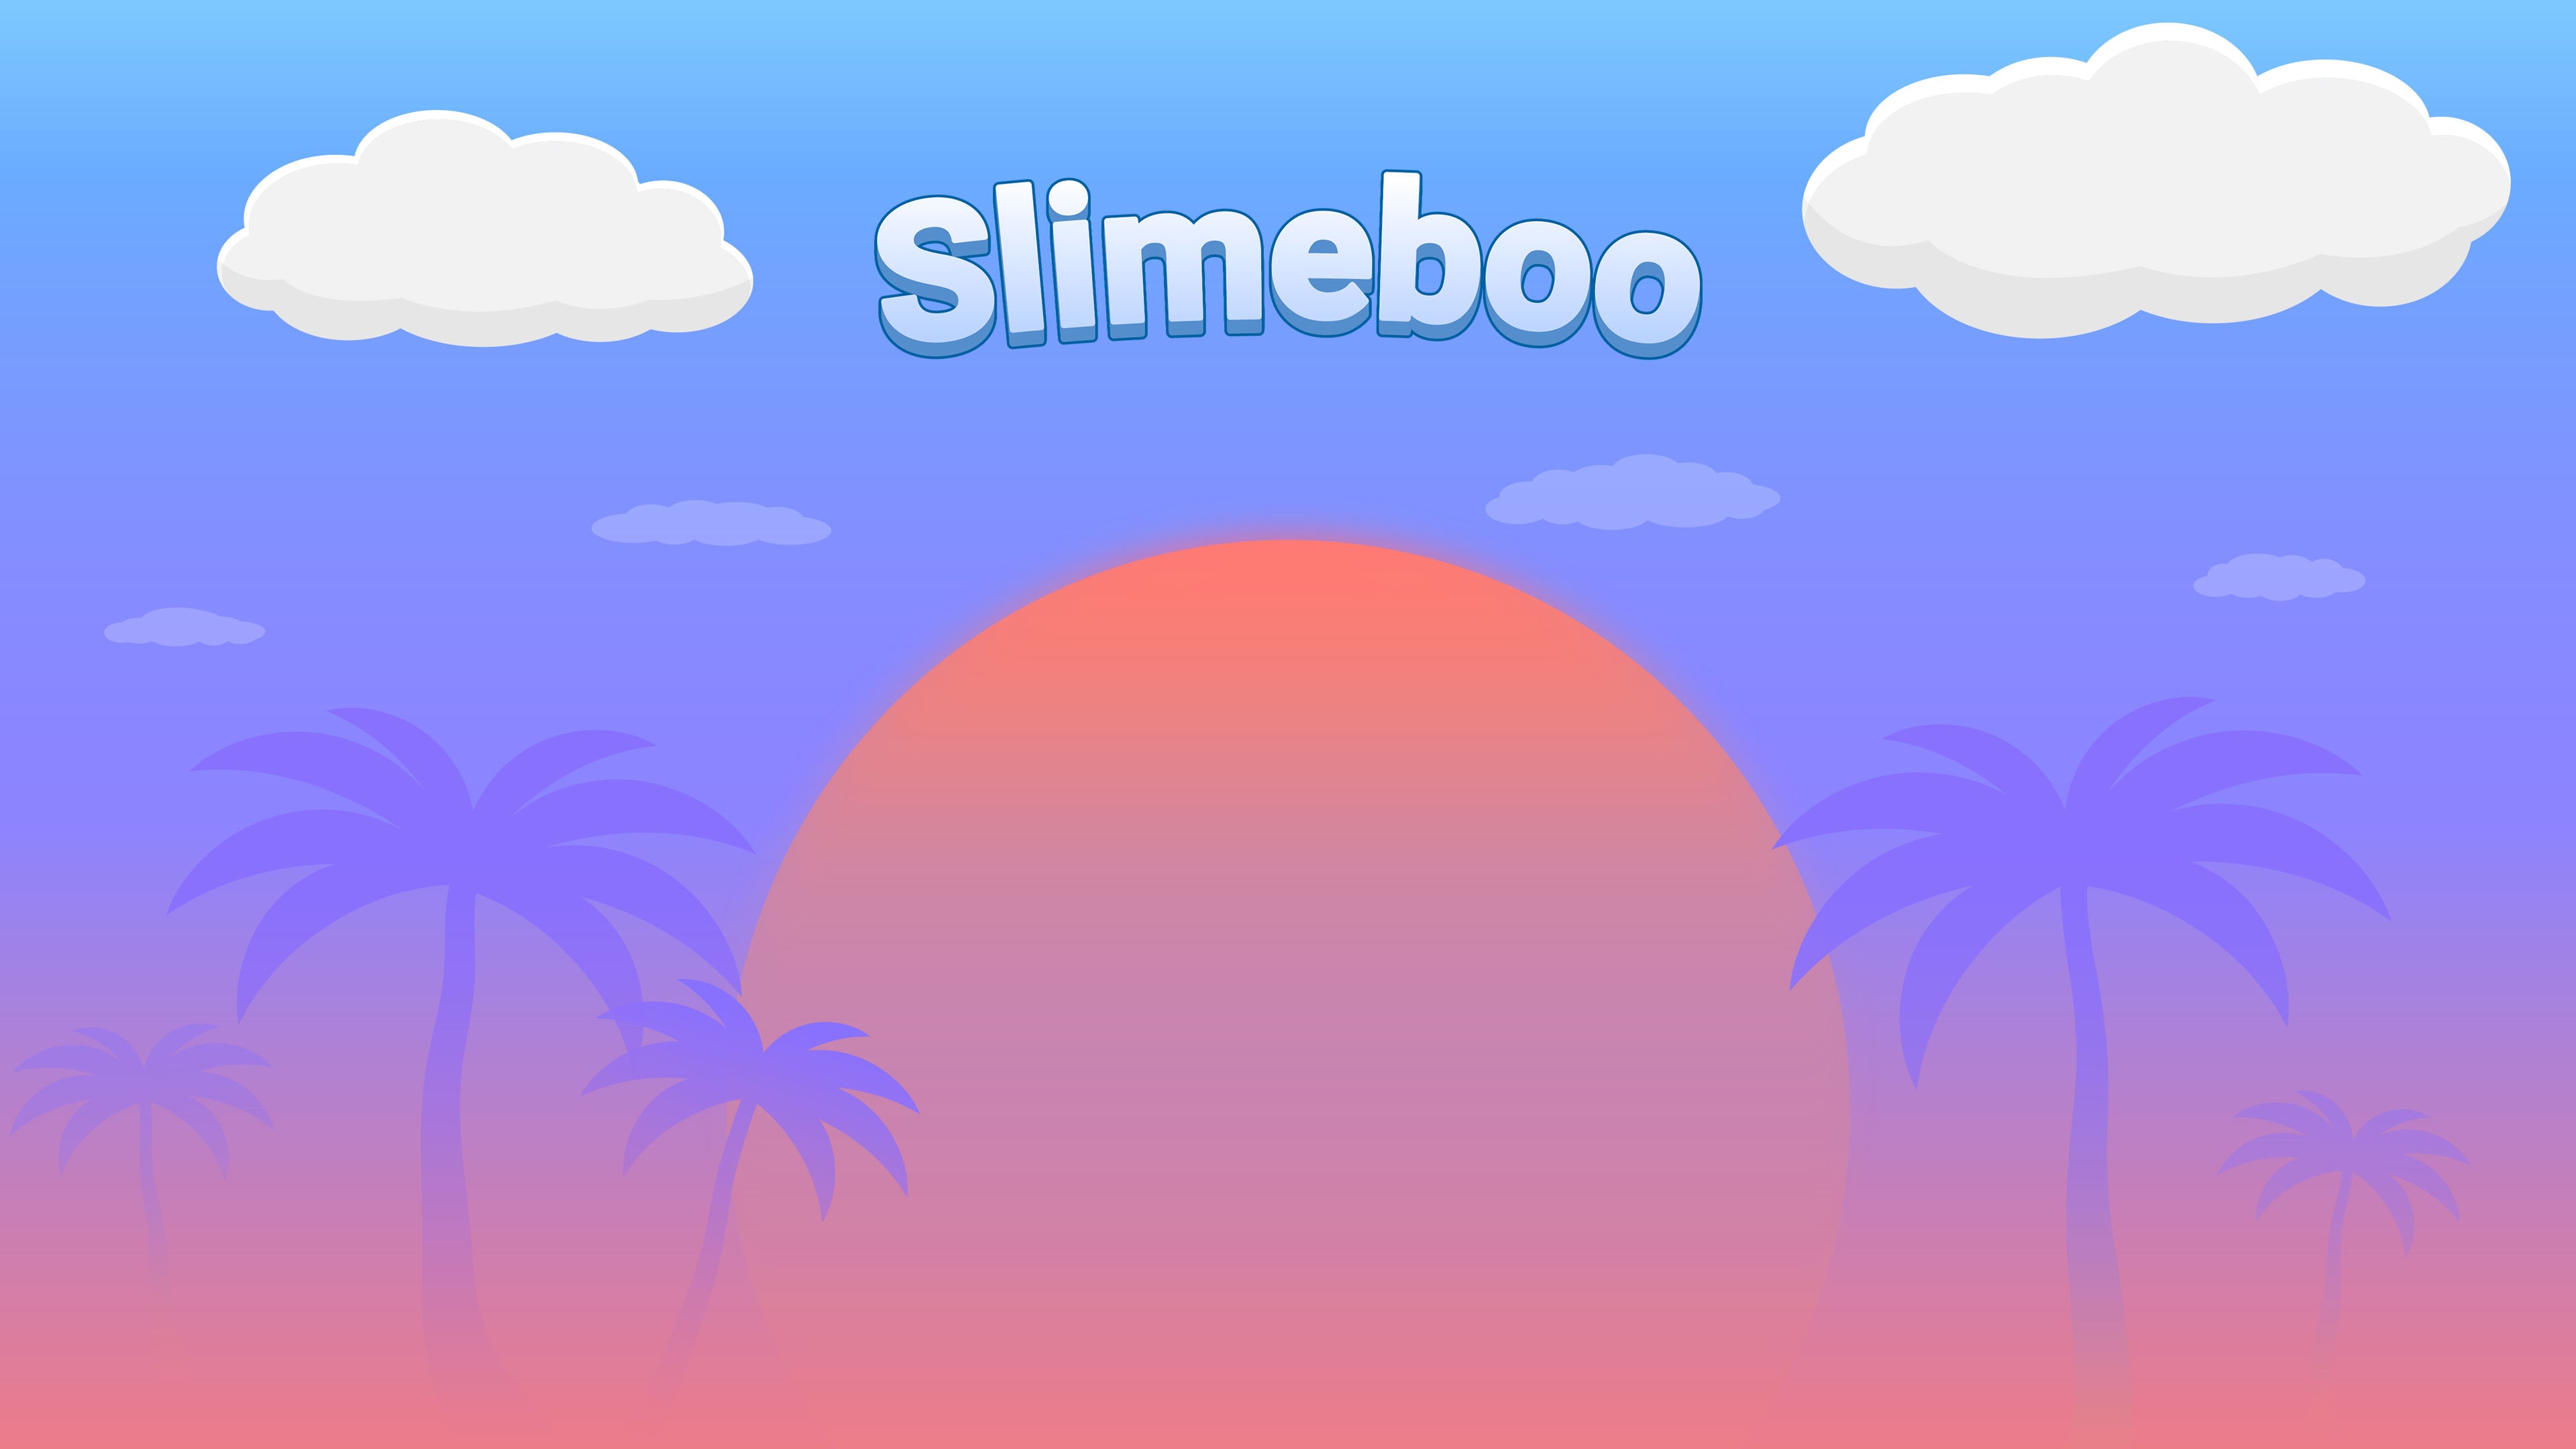 Slimeboo (English)